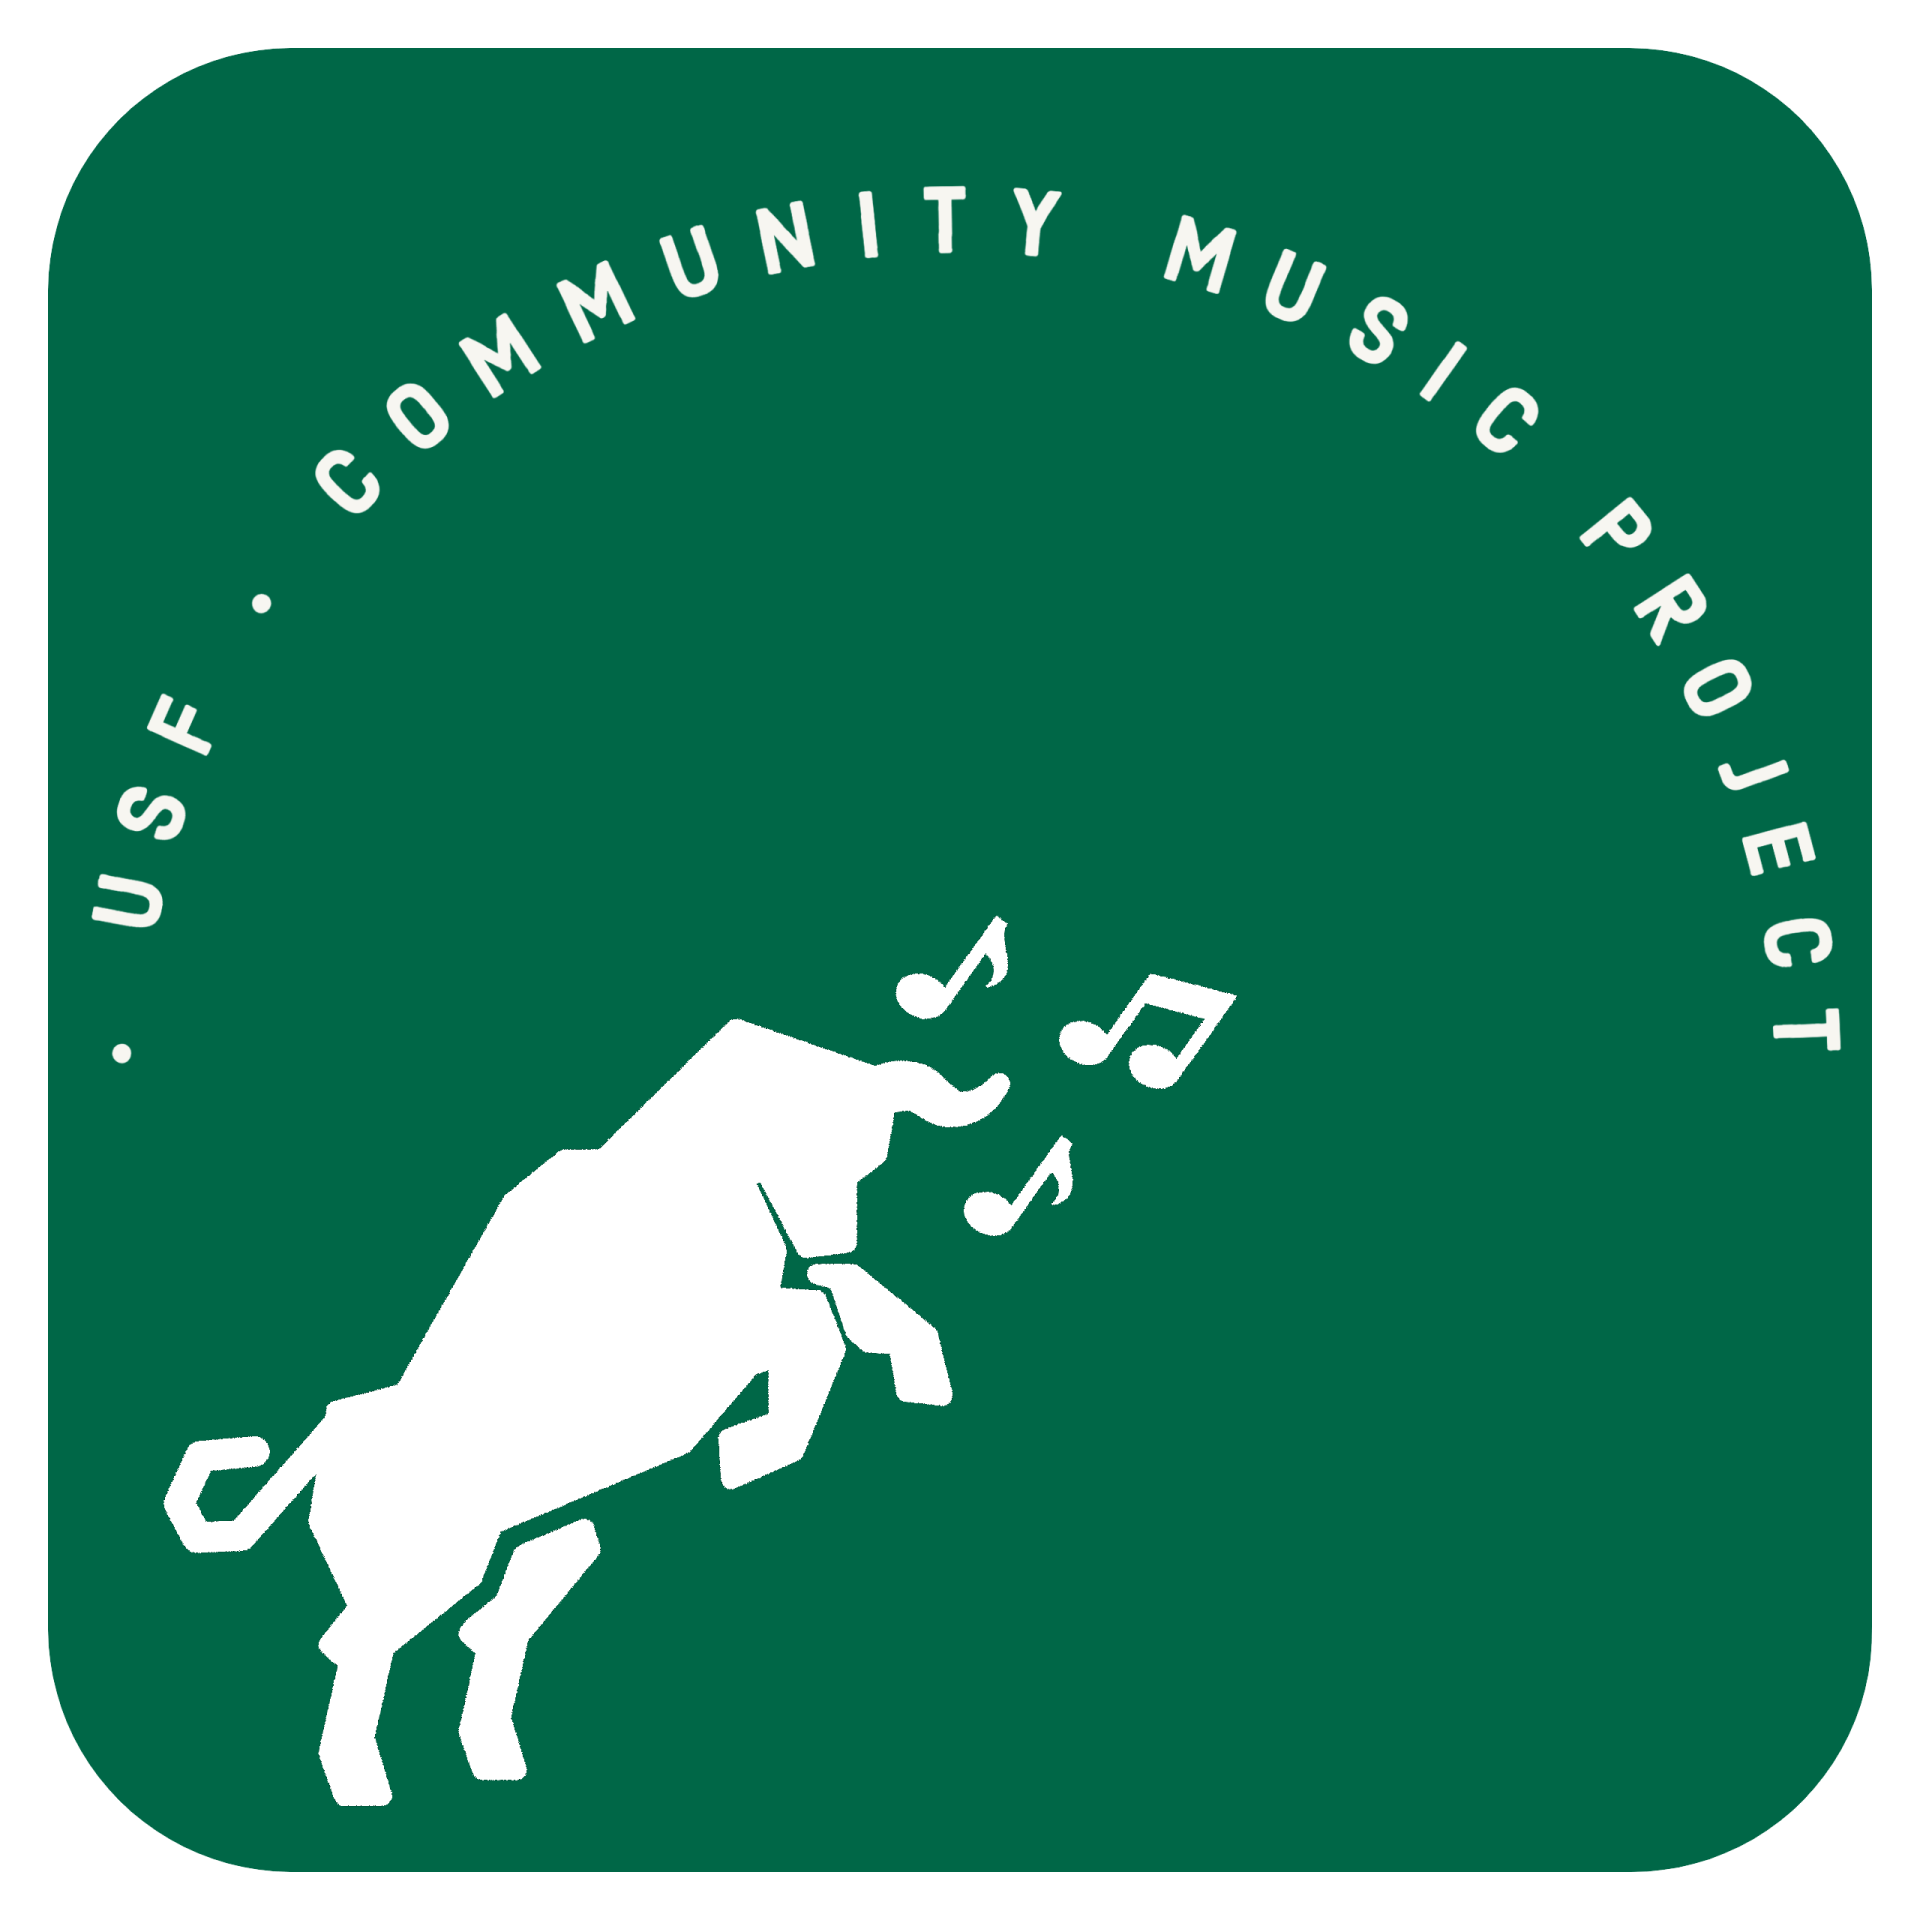 USF Community Music Project